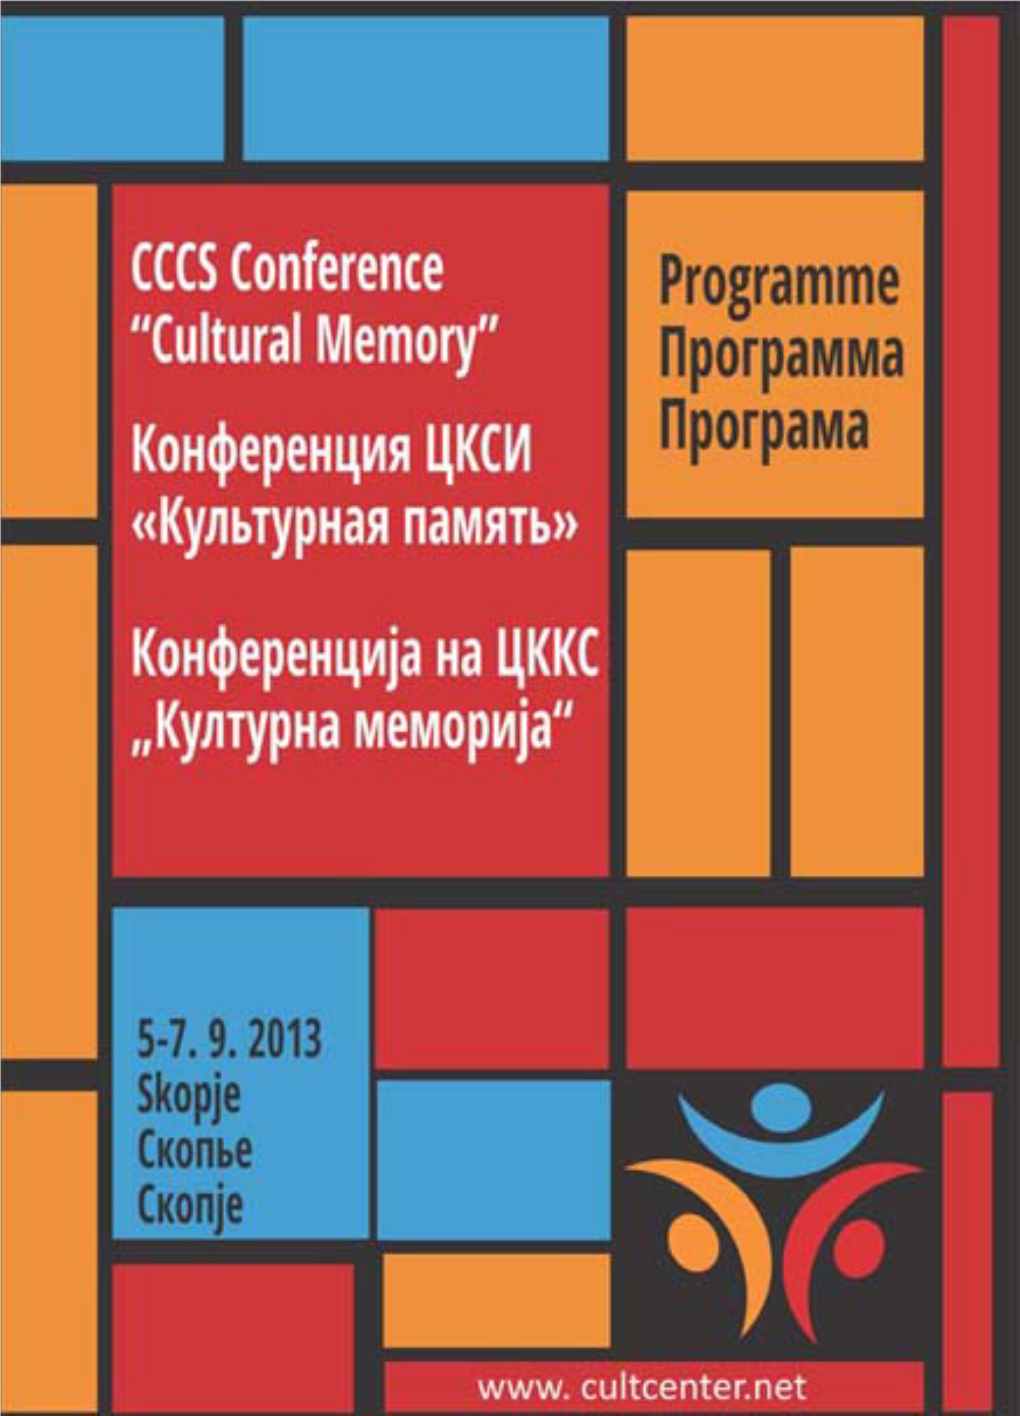 CCCS Conference “Cultural Memory”